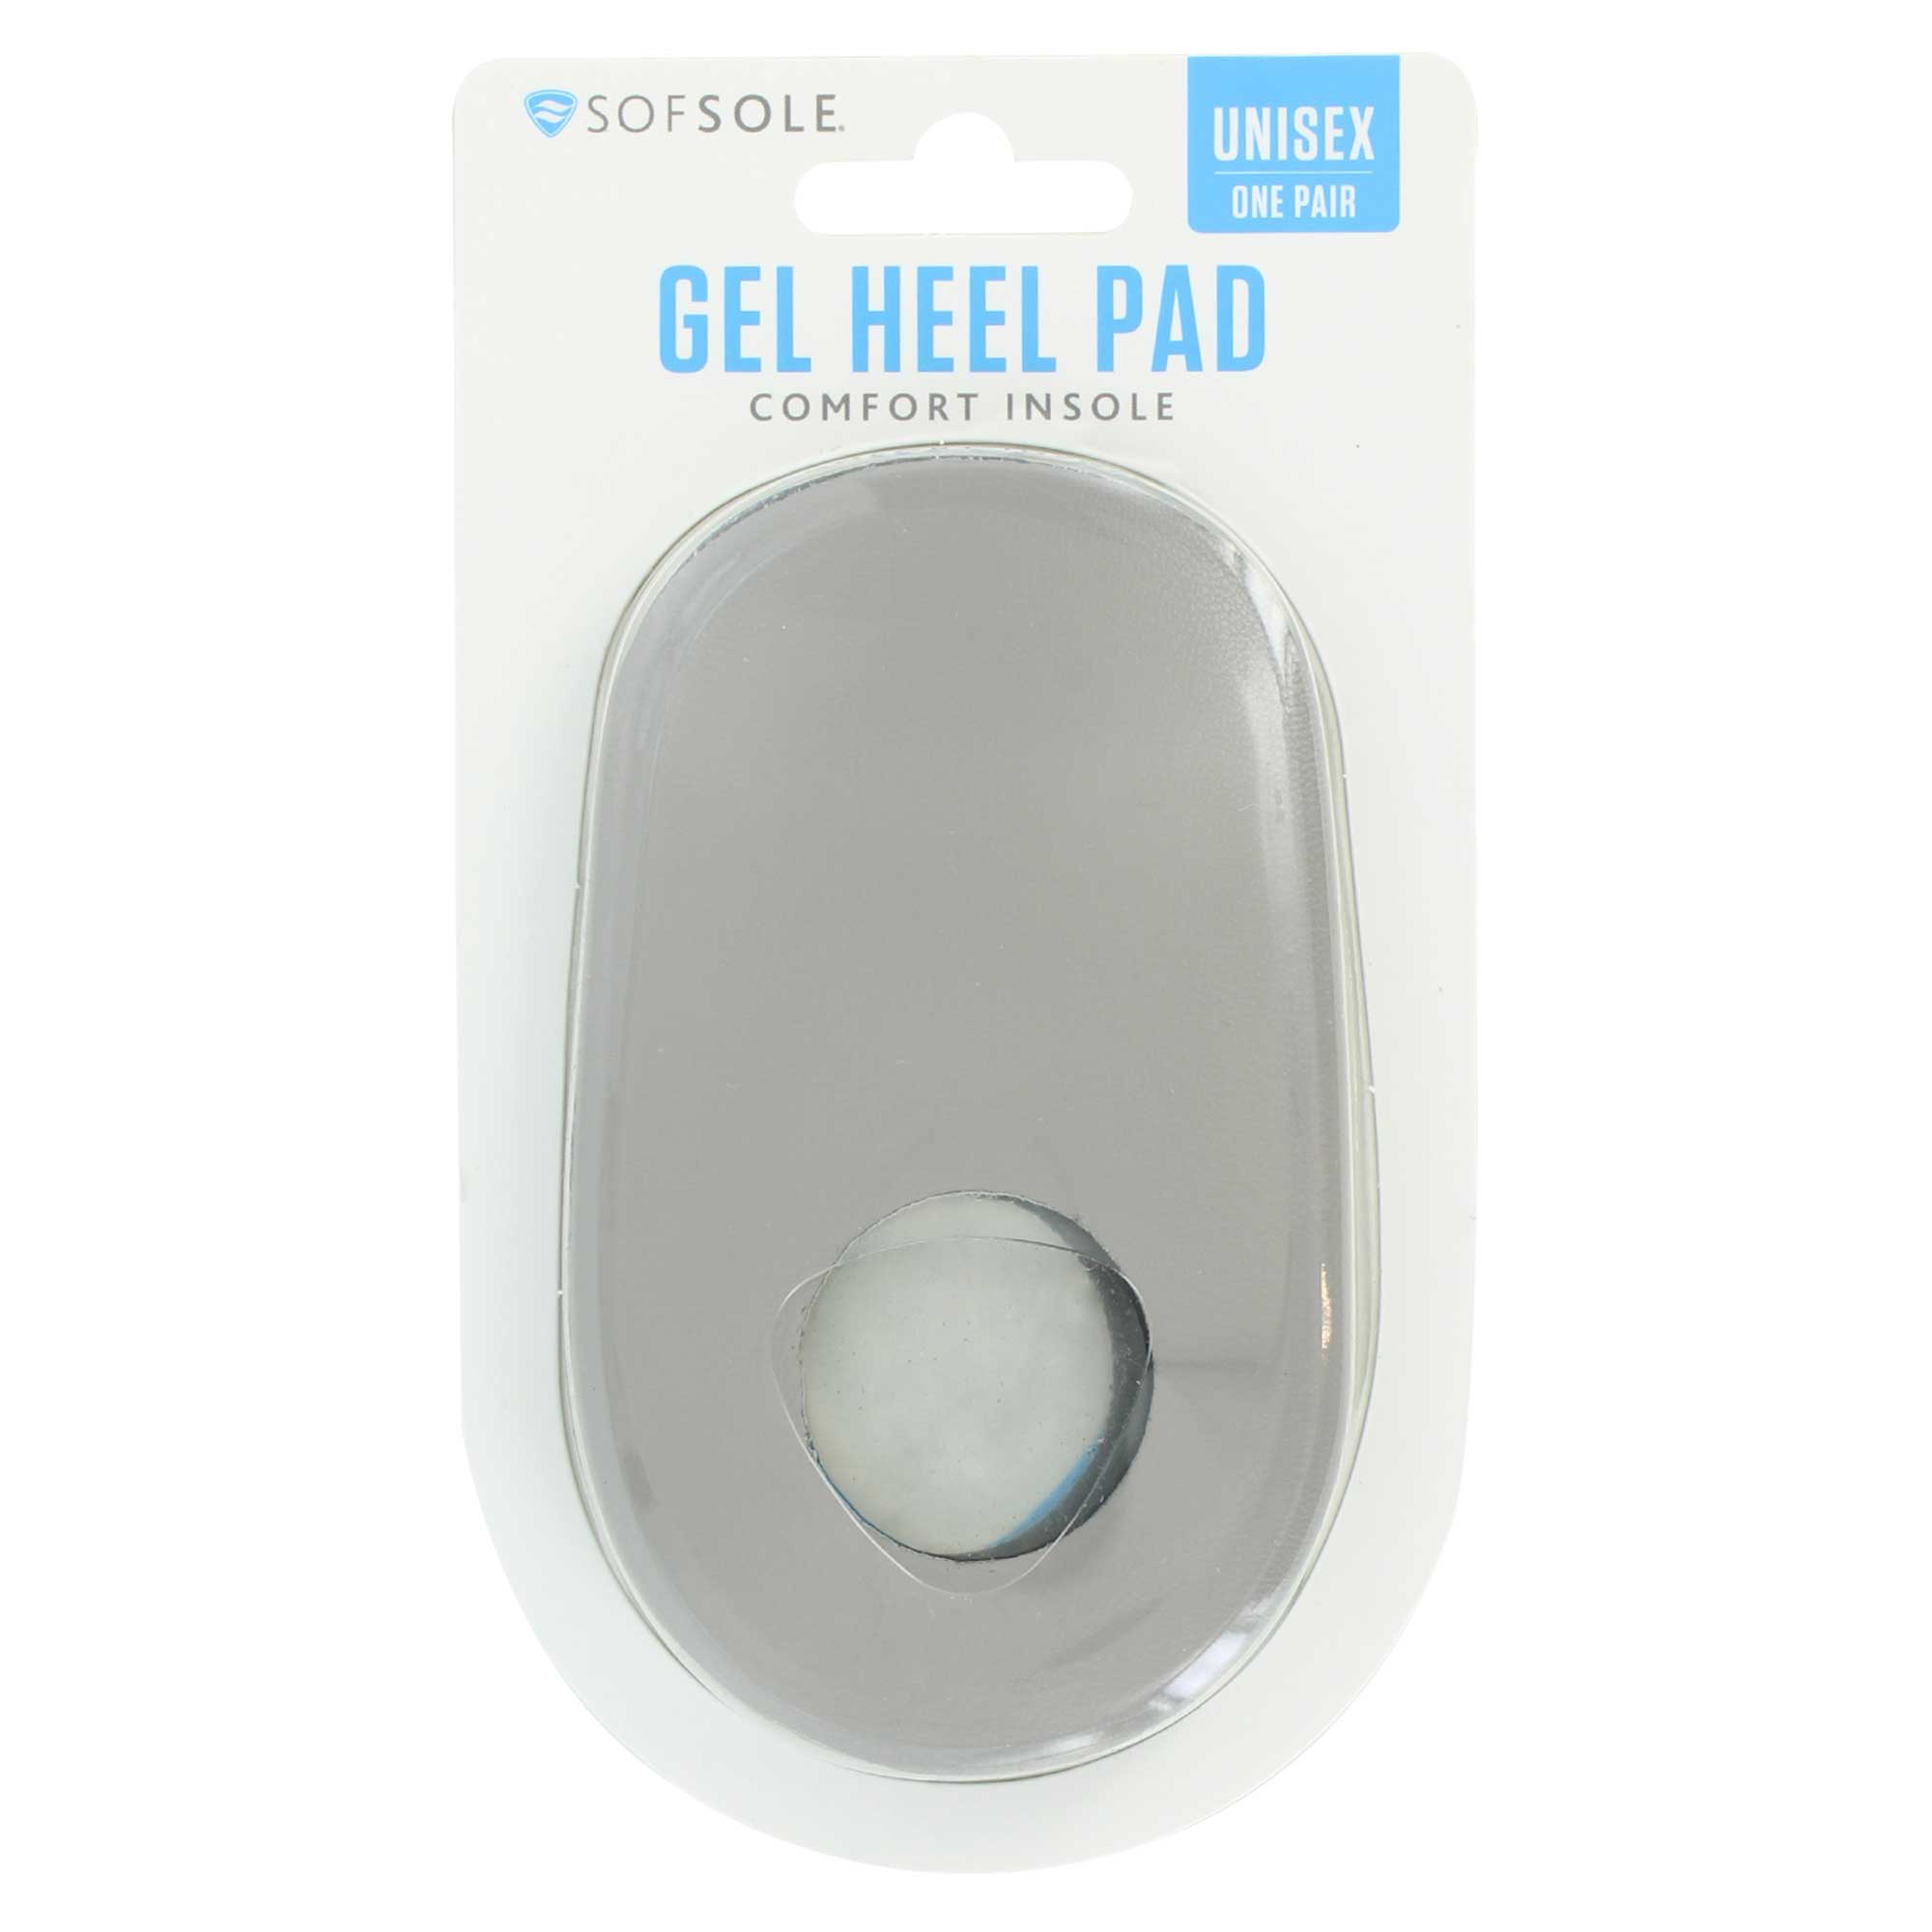 SOF SOLE® Gel Heel Pad Comfort Insole 1 